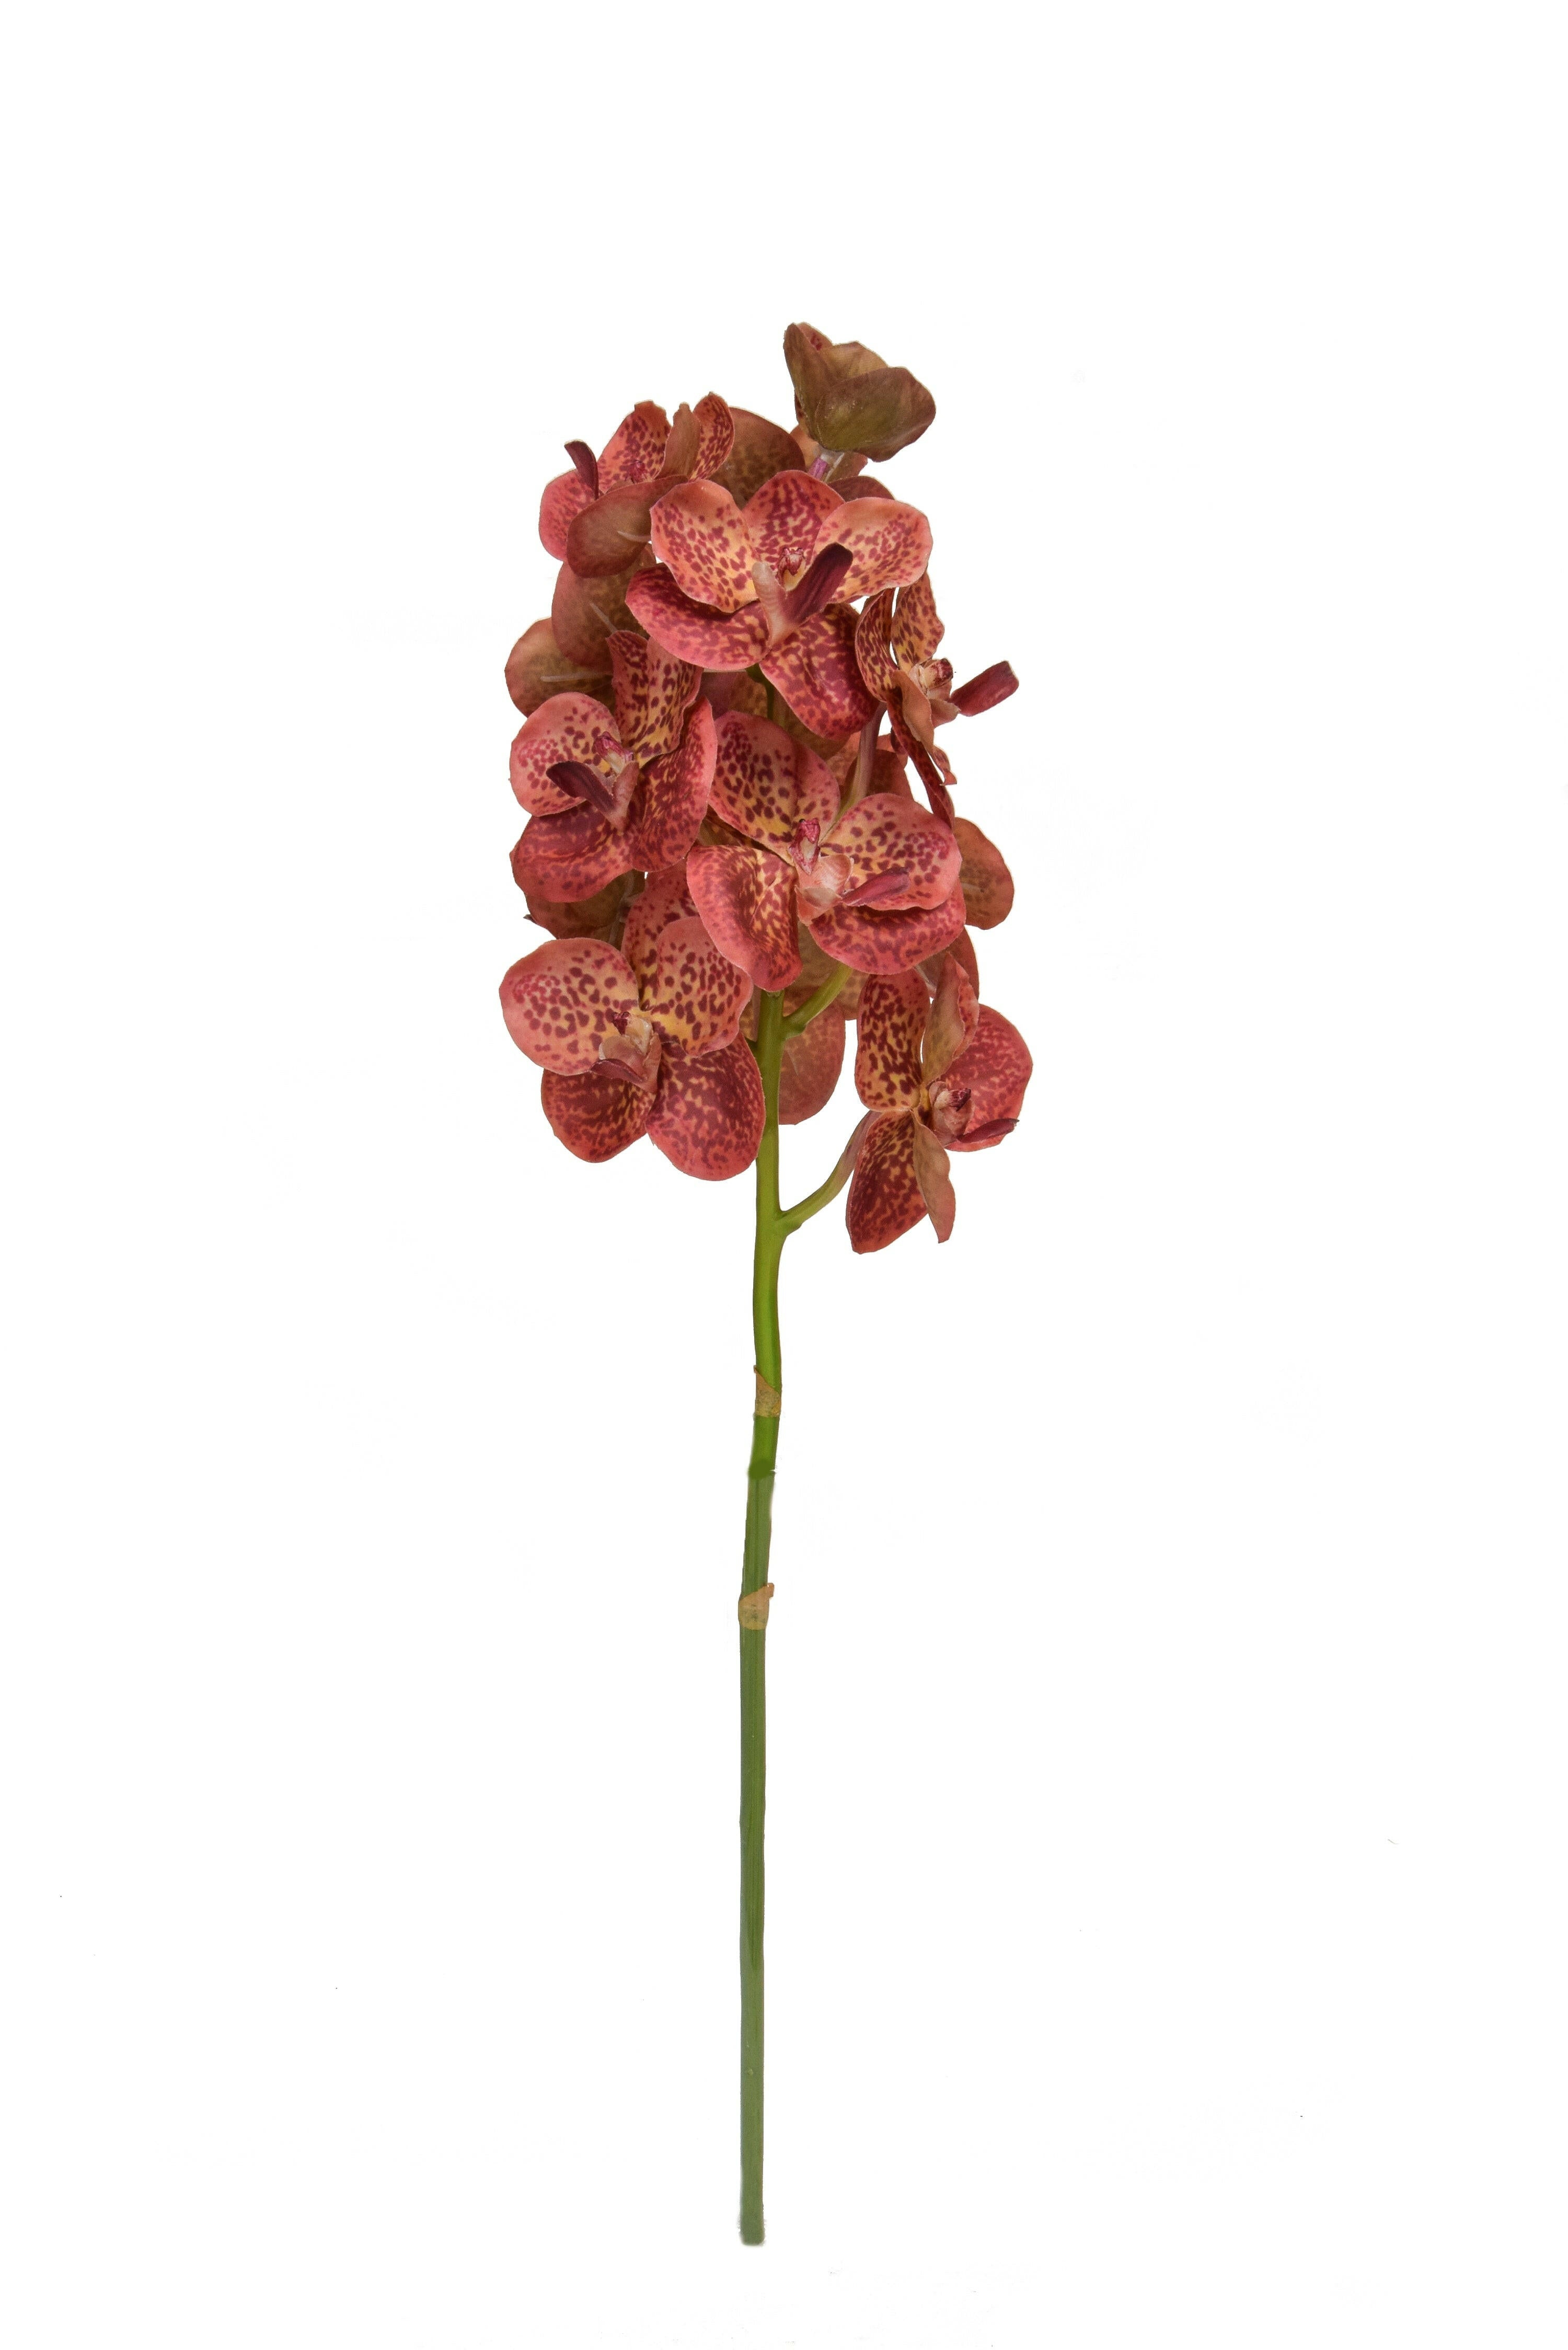 Artificial Silk Vanda Orchid